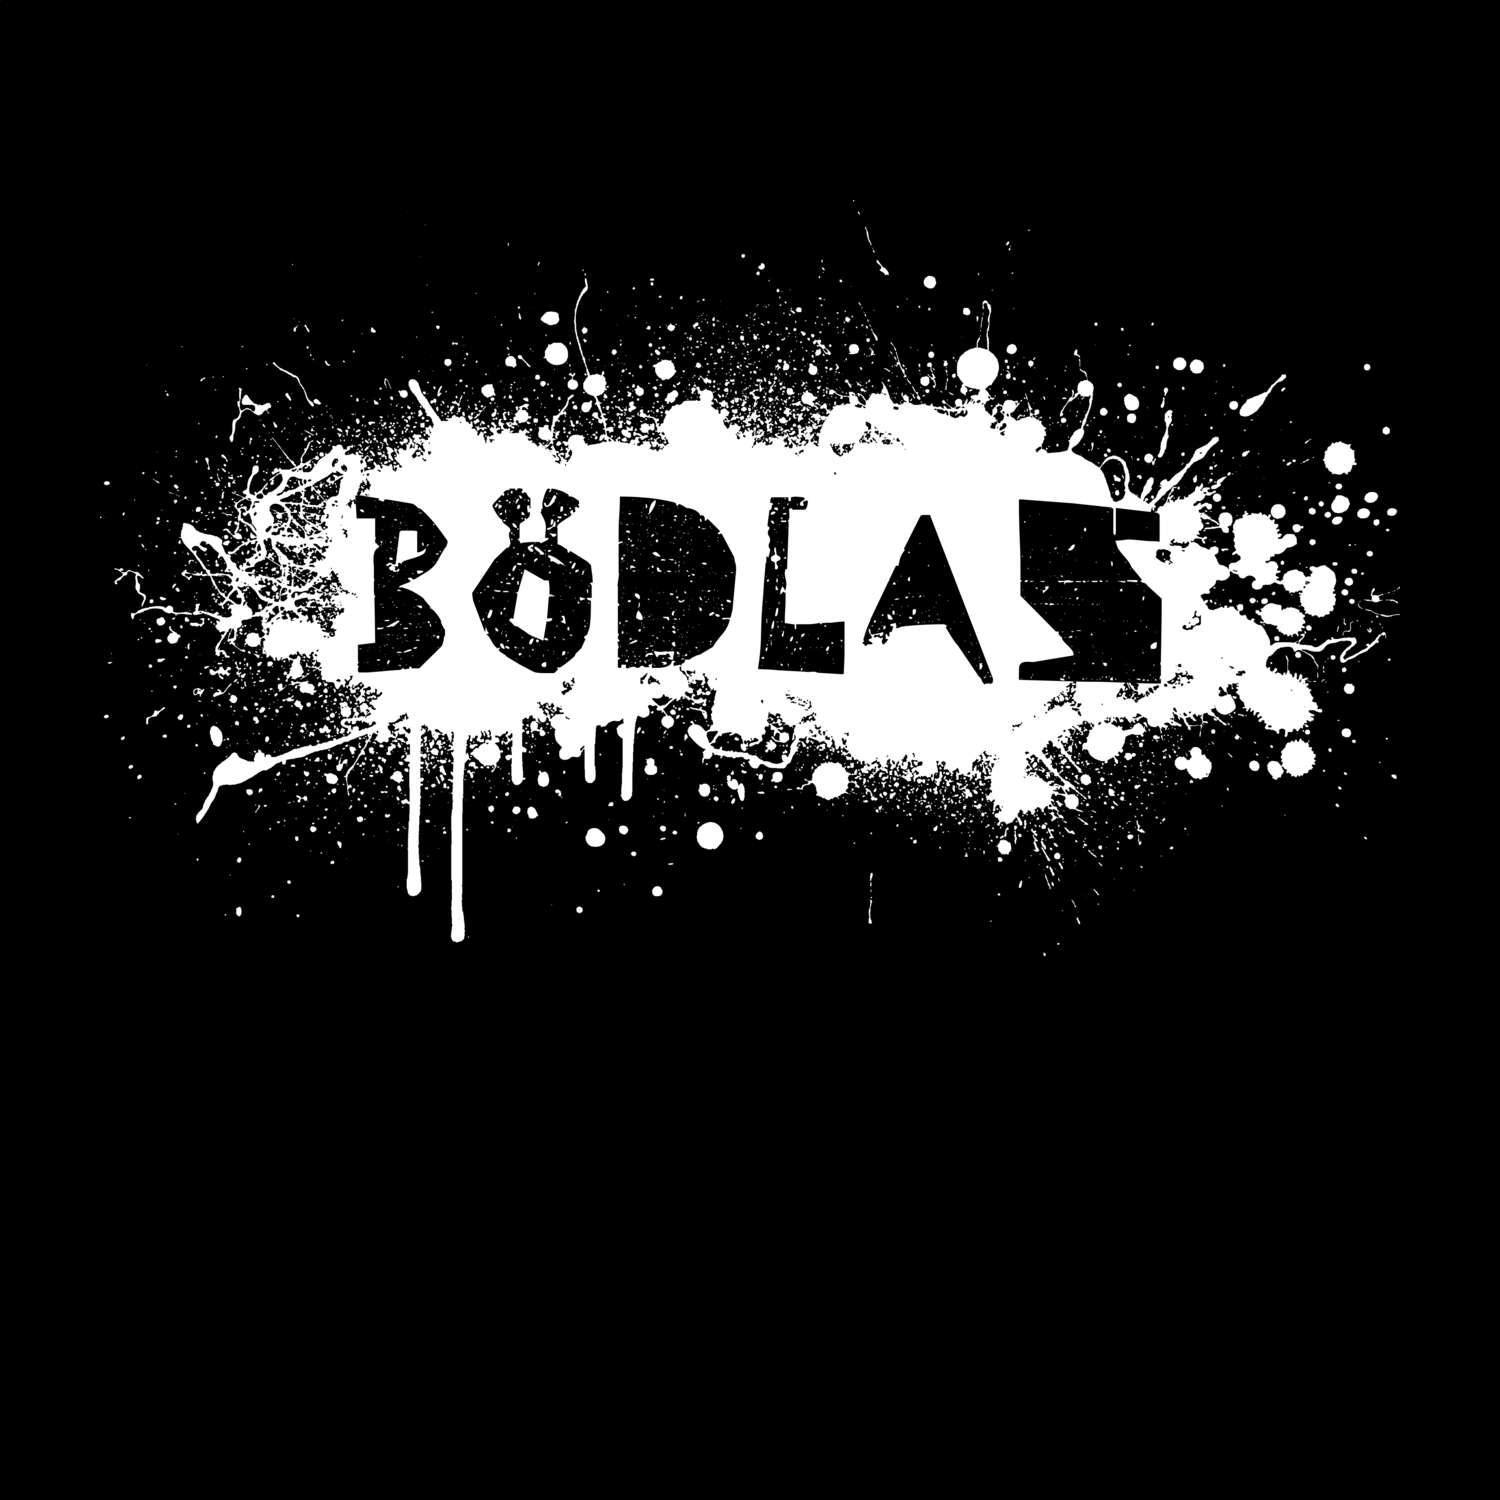 Bödlas T-Shirt »Paint Splash Punk«